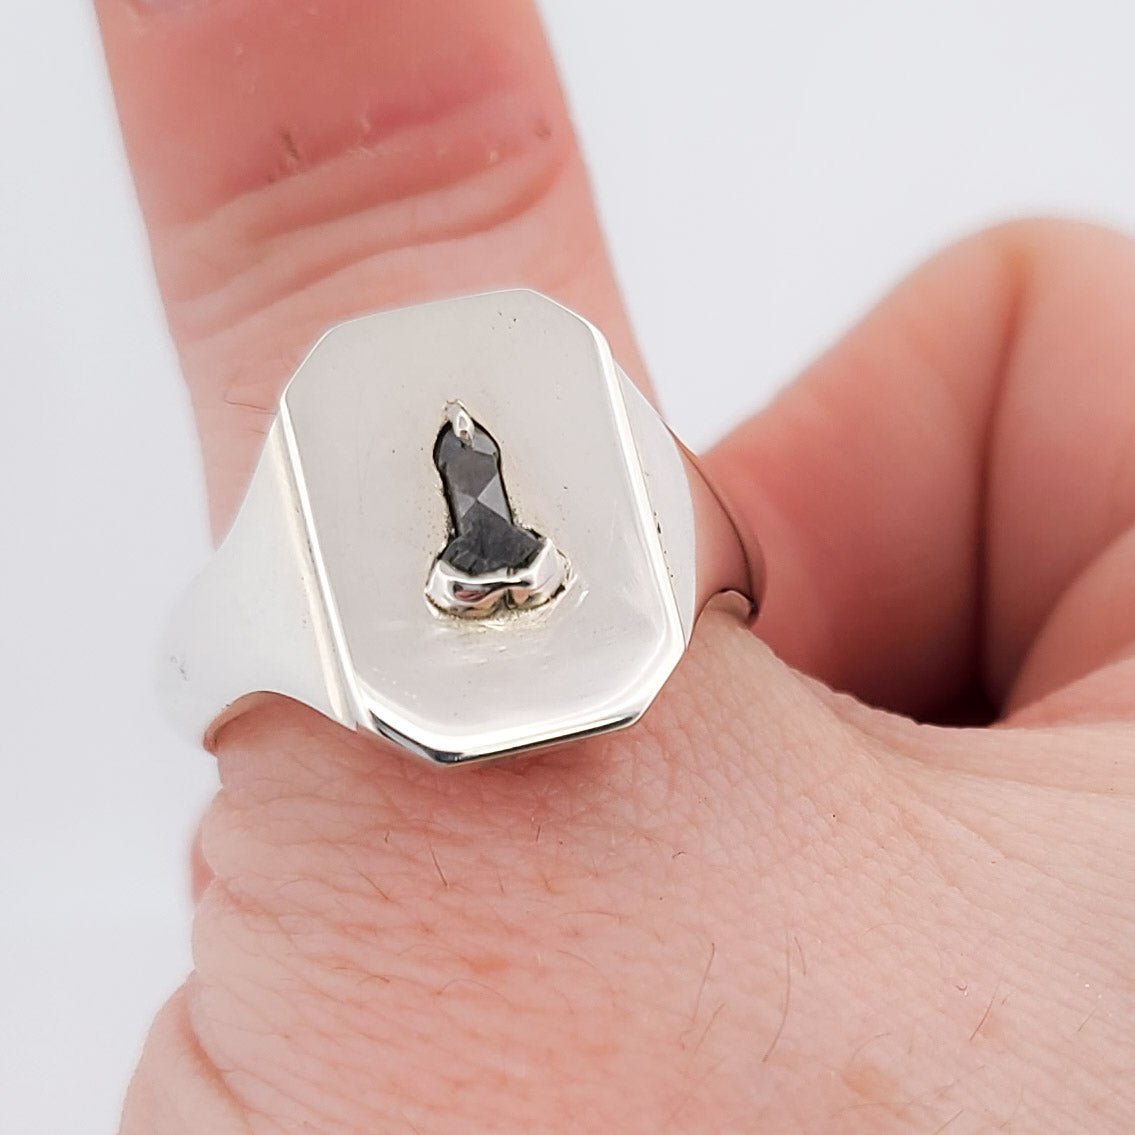 Mature Salt and Pepper Diamond Penis Signet Ring